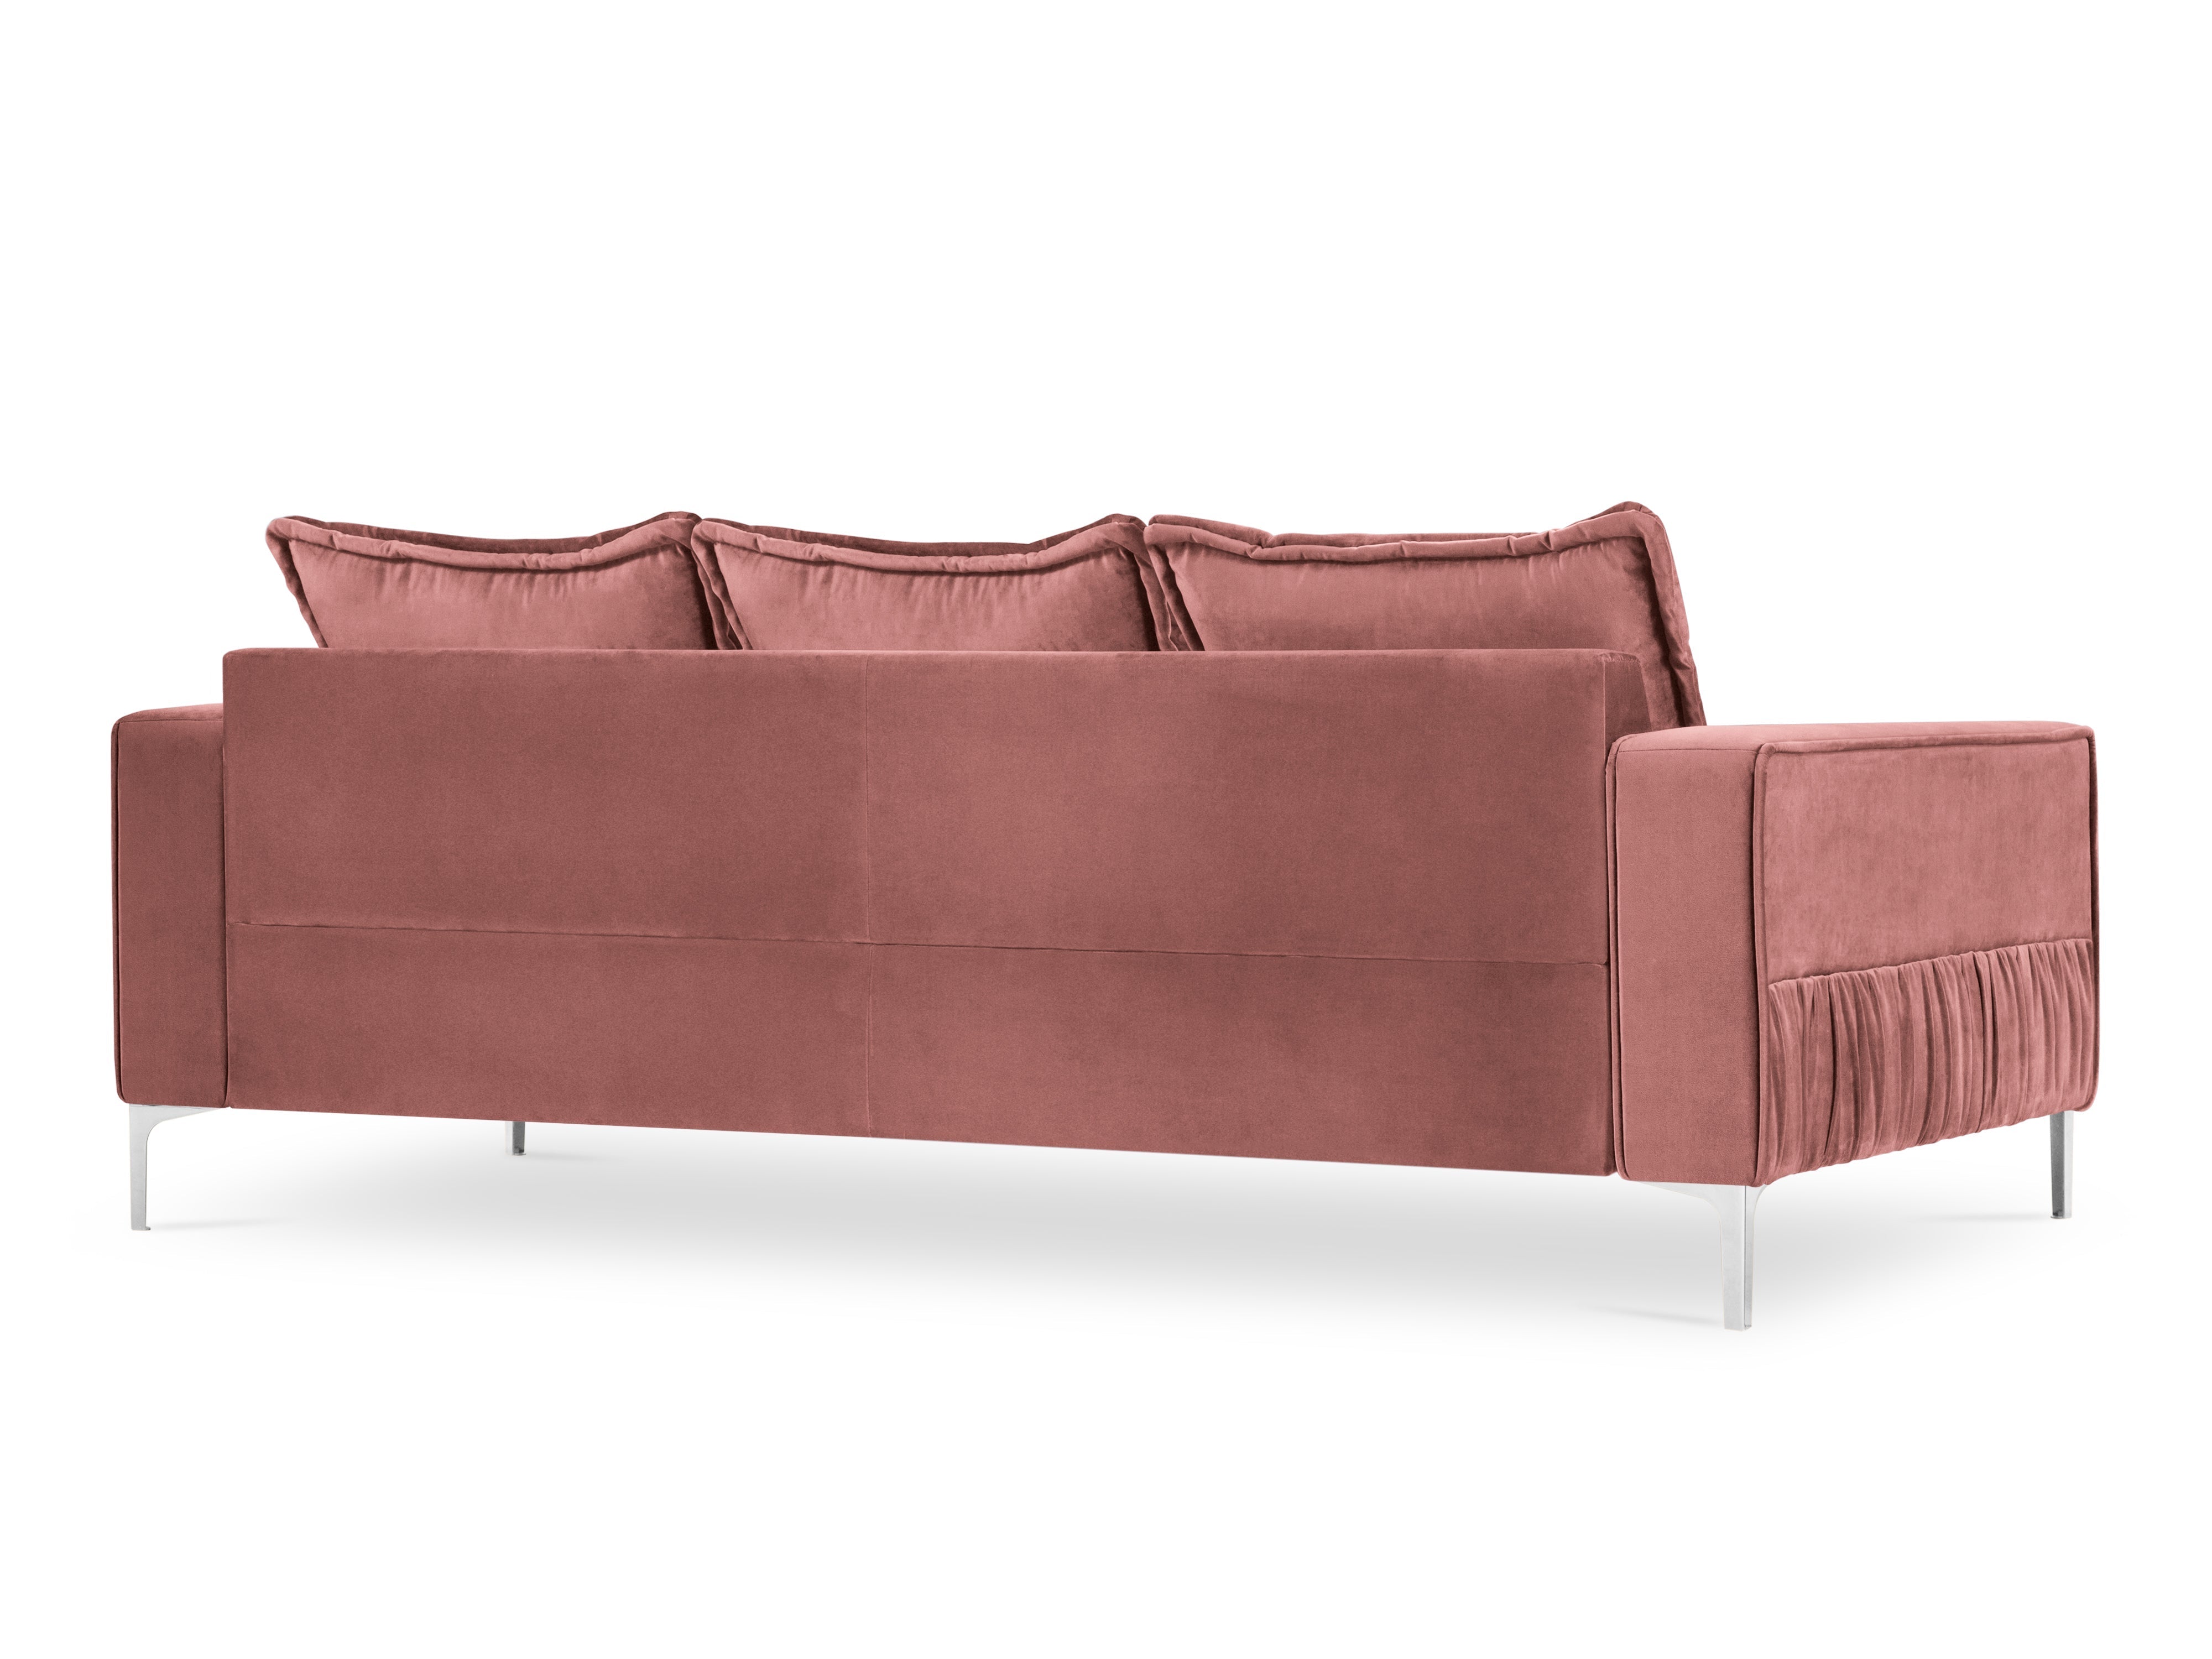 Pink velvet sofa with pillows